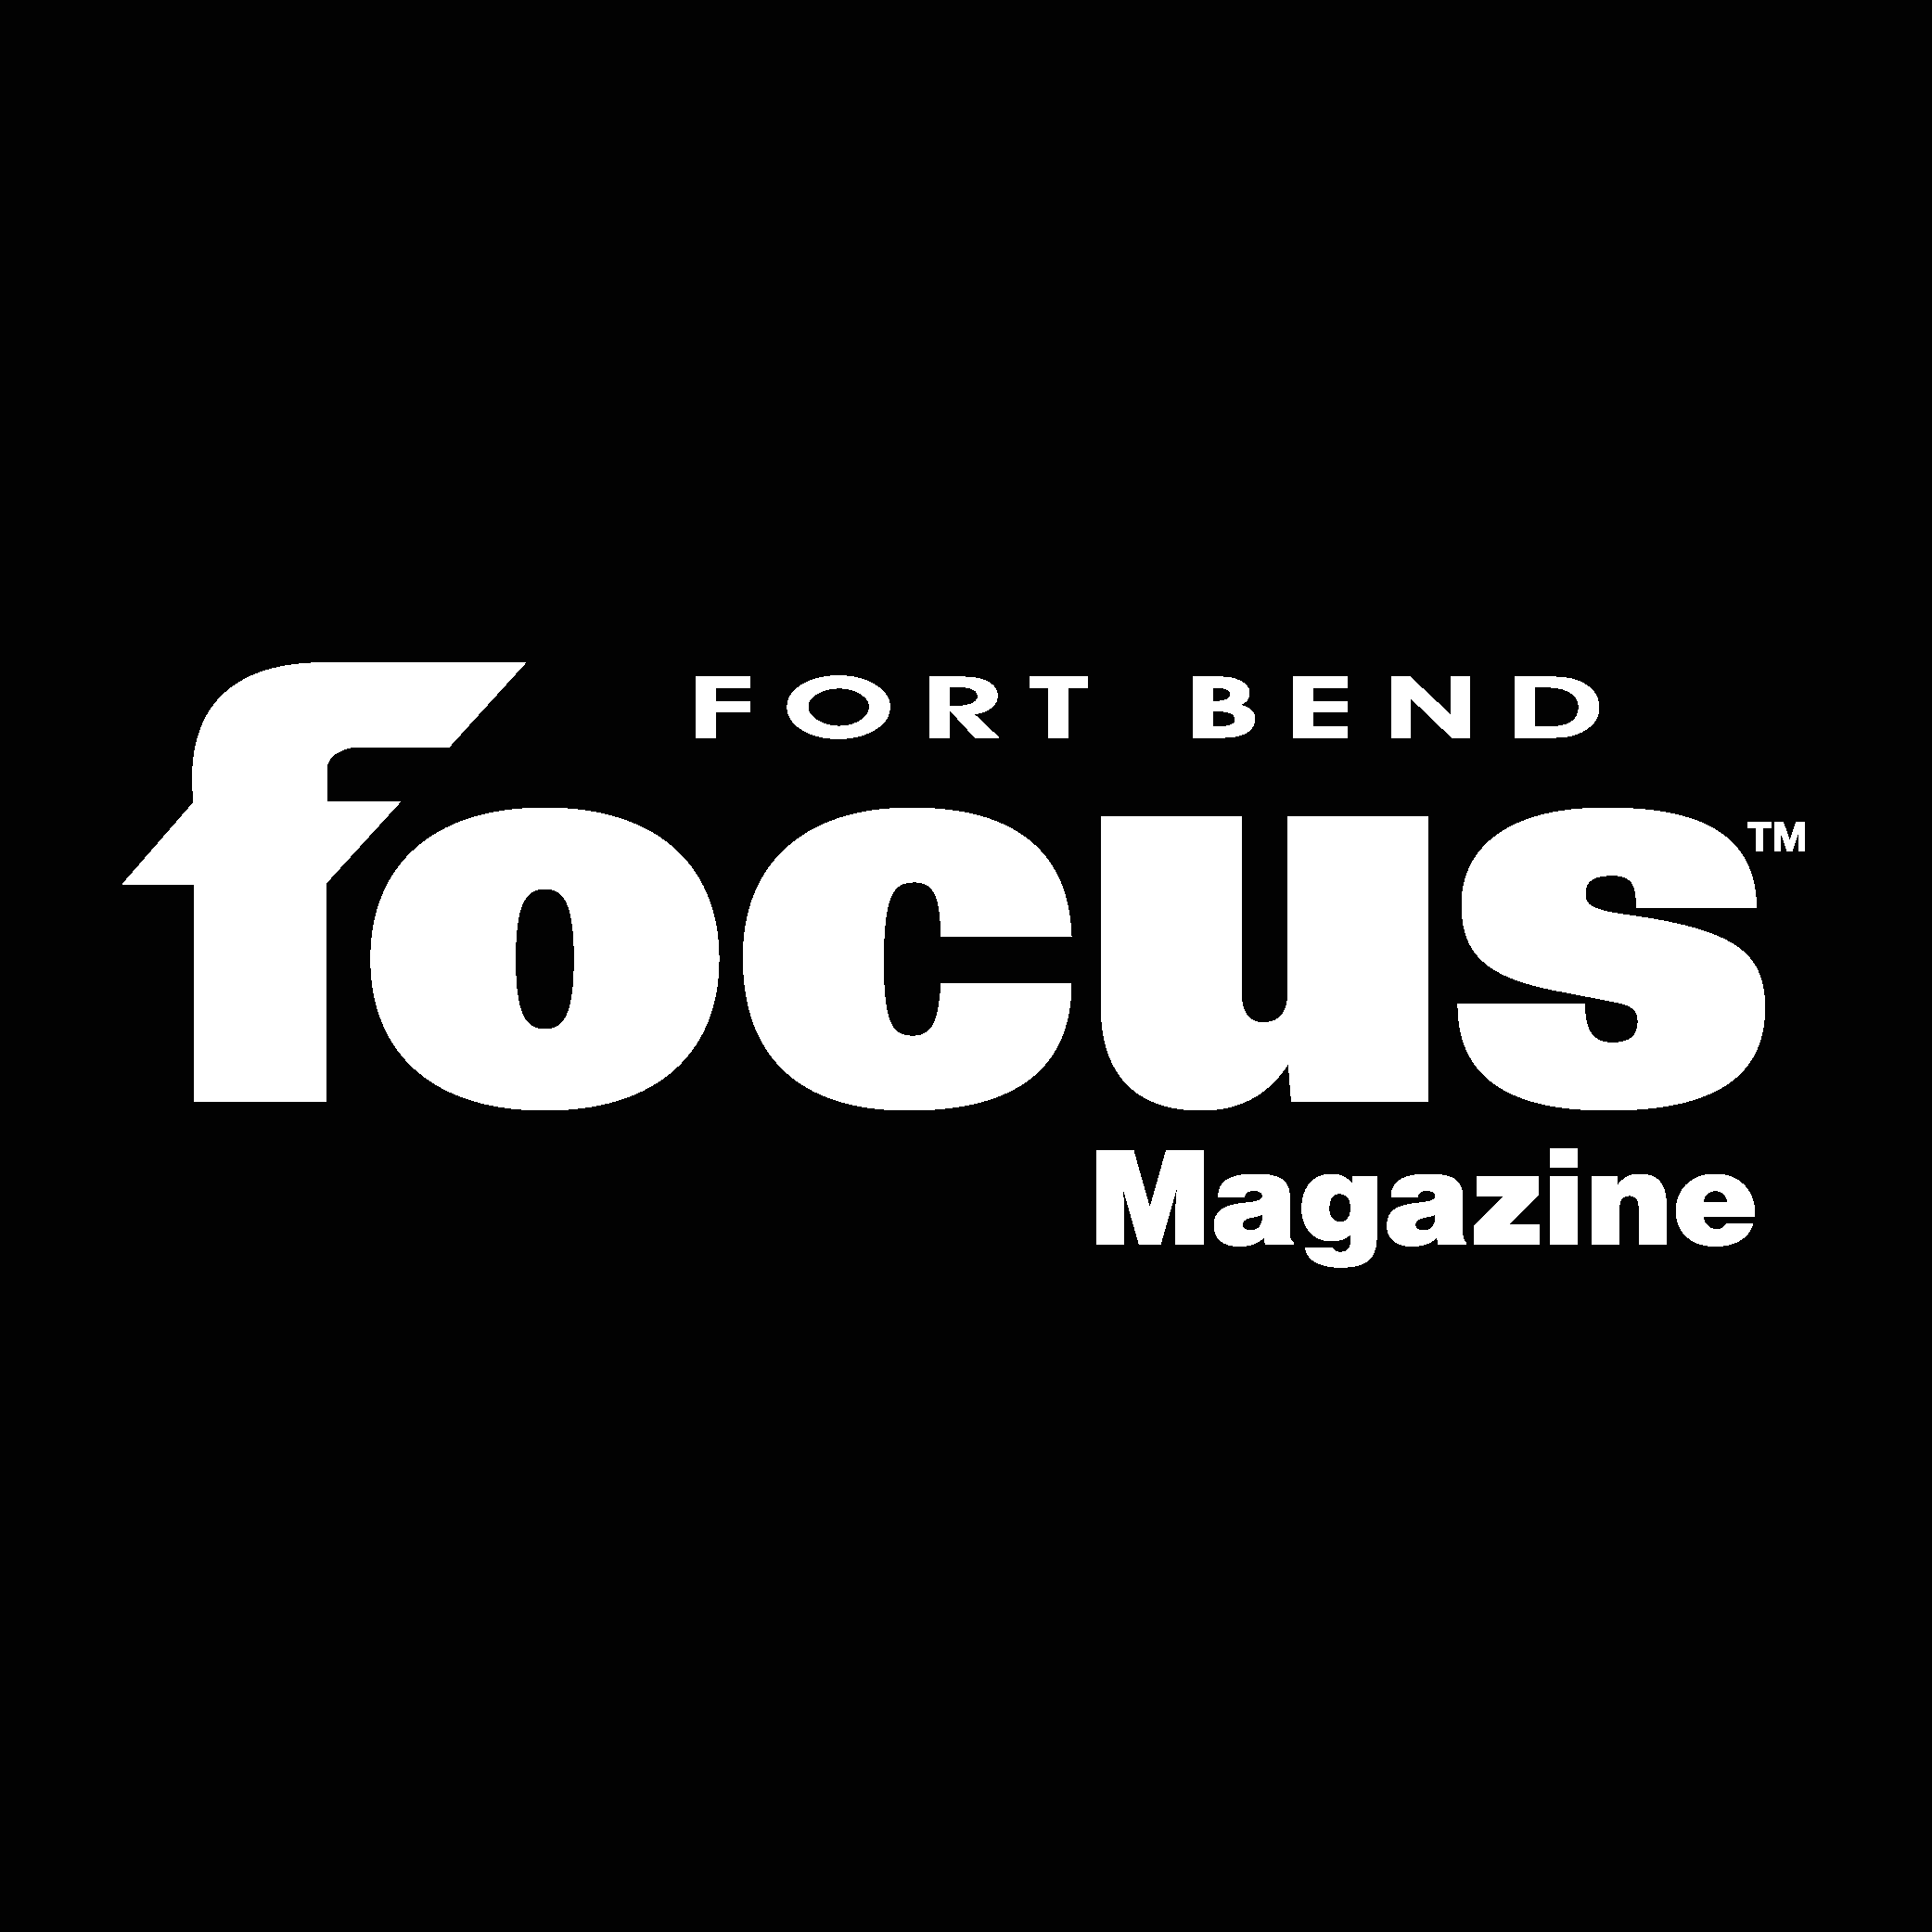 Fort Bend Focus Magazine white Logo Vector